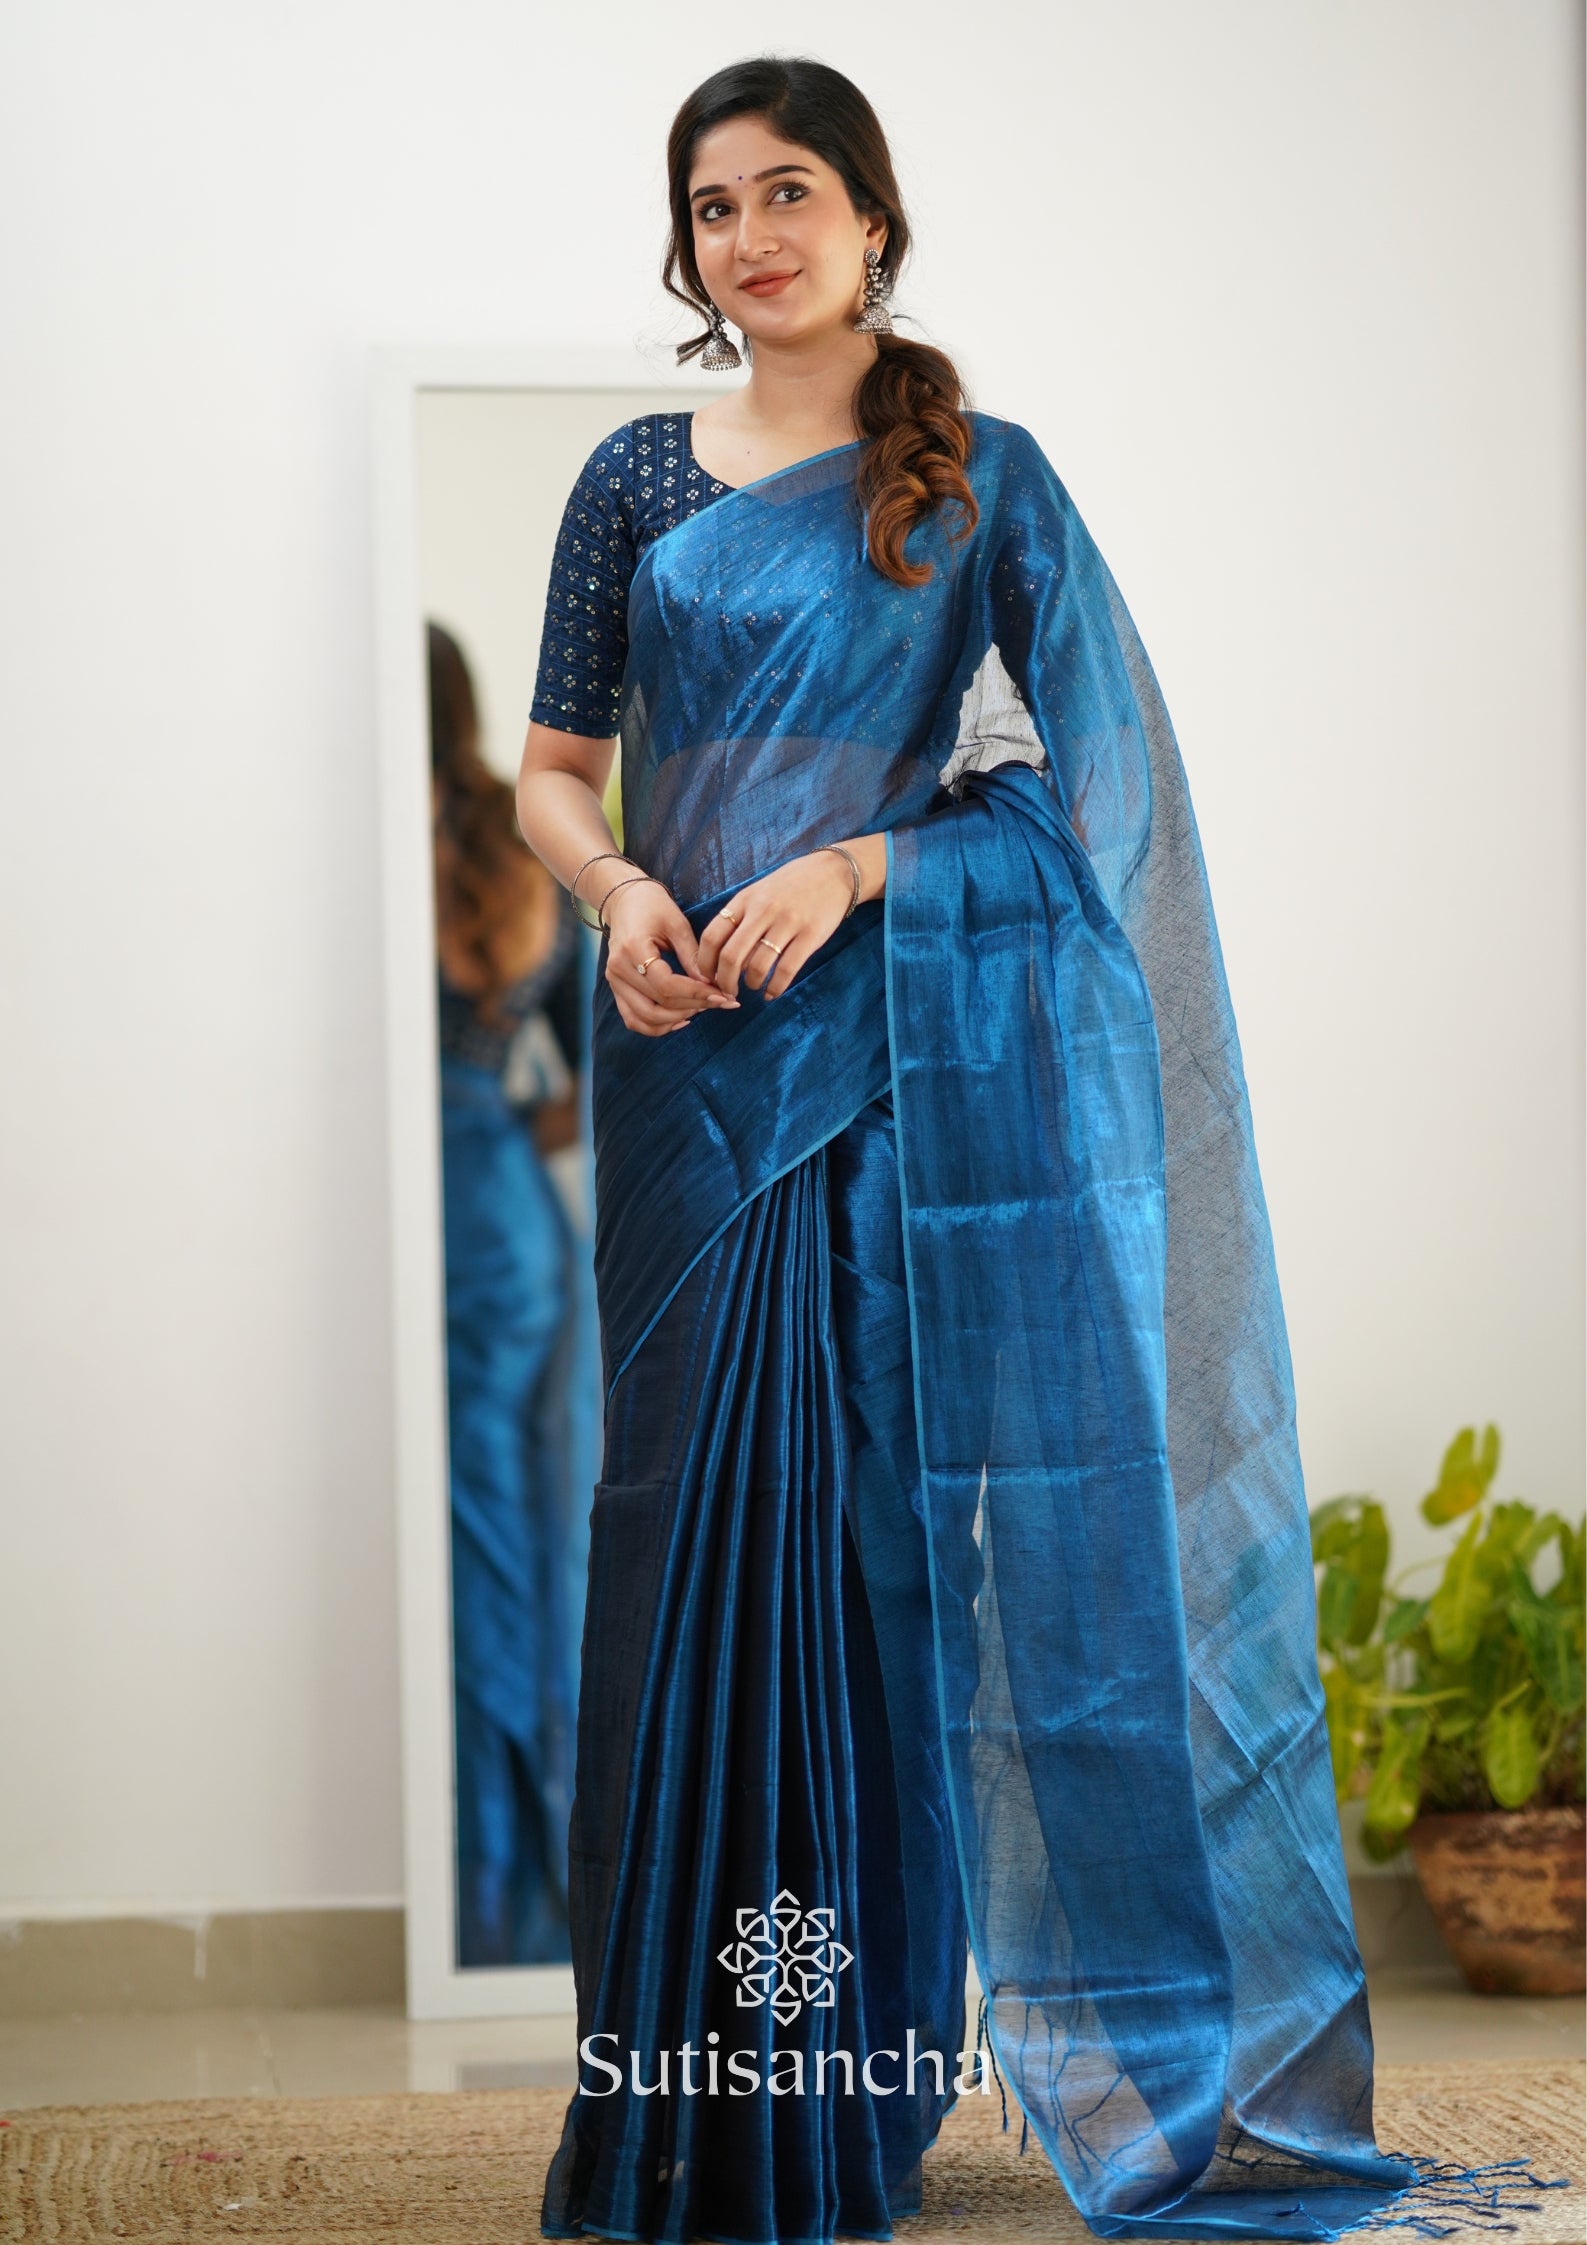 Sutisancha Indigoblue Handloom Tissue Saree With Designer Blouse